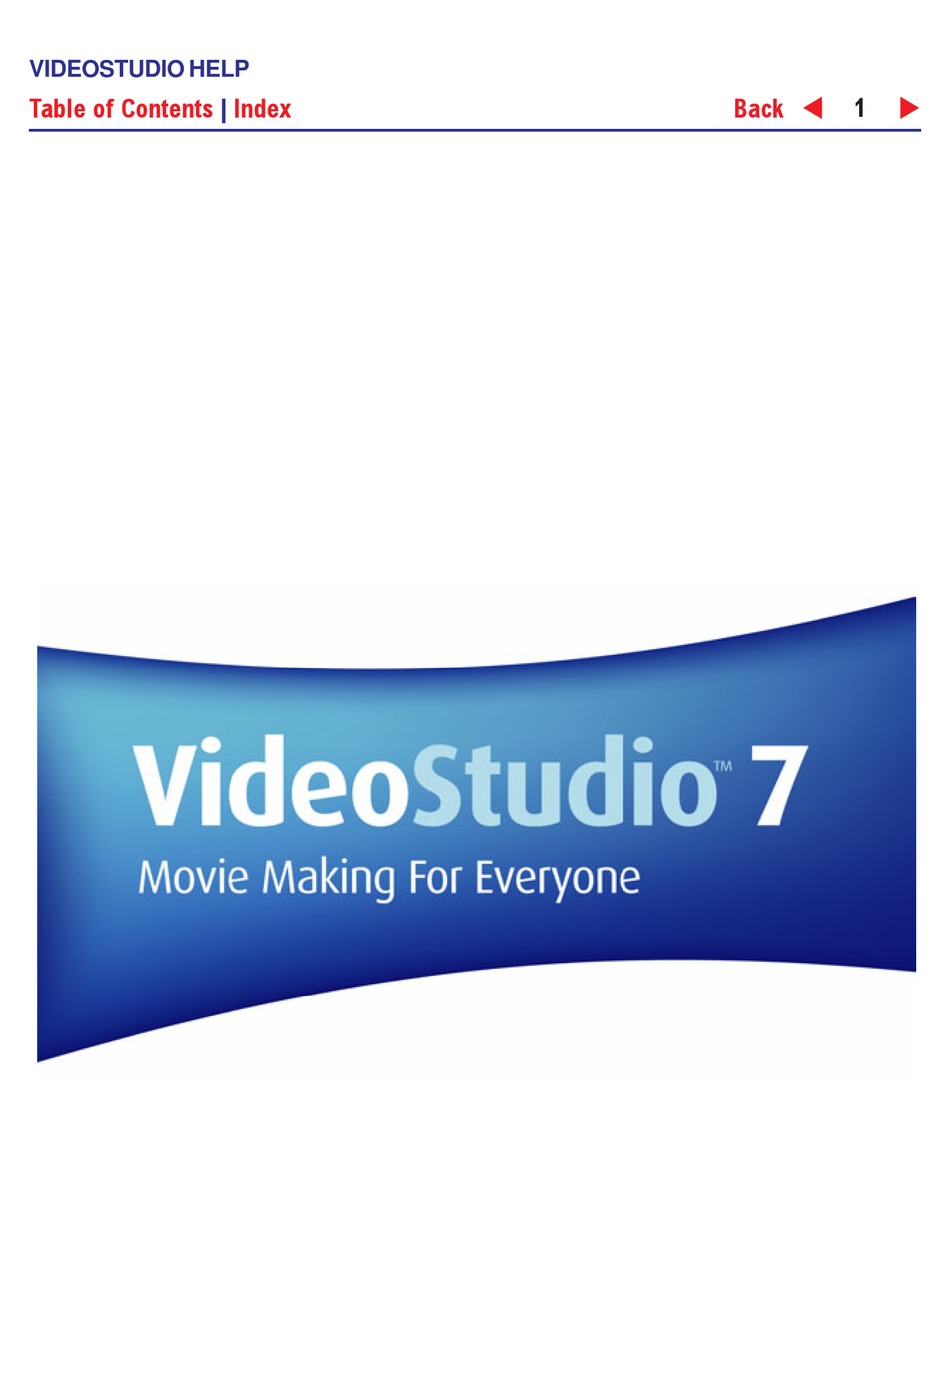 ulead video studio 12 free download for windows 7